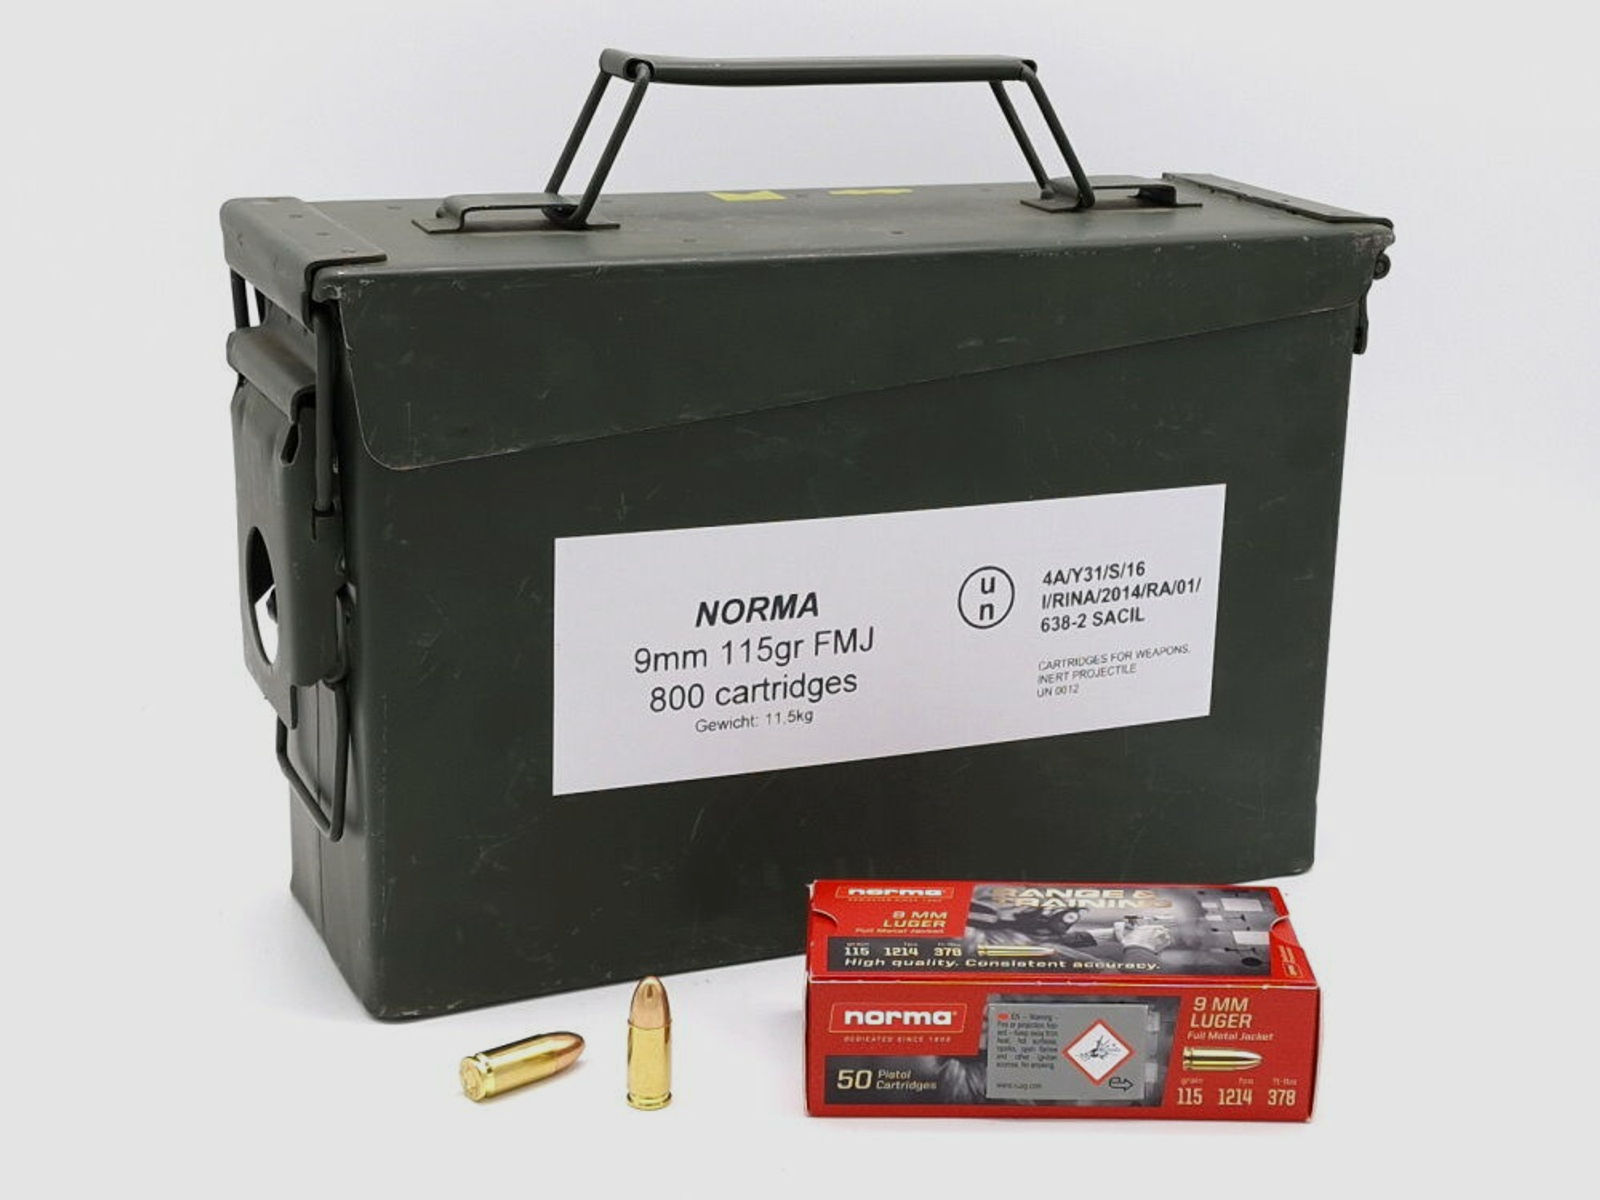 Norma	 9mm Luger Norma 7,5g / 115grs FMJ in der Natokiste 800 Stück